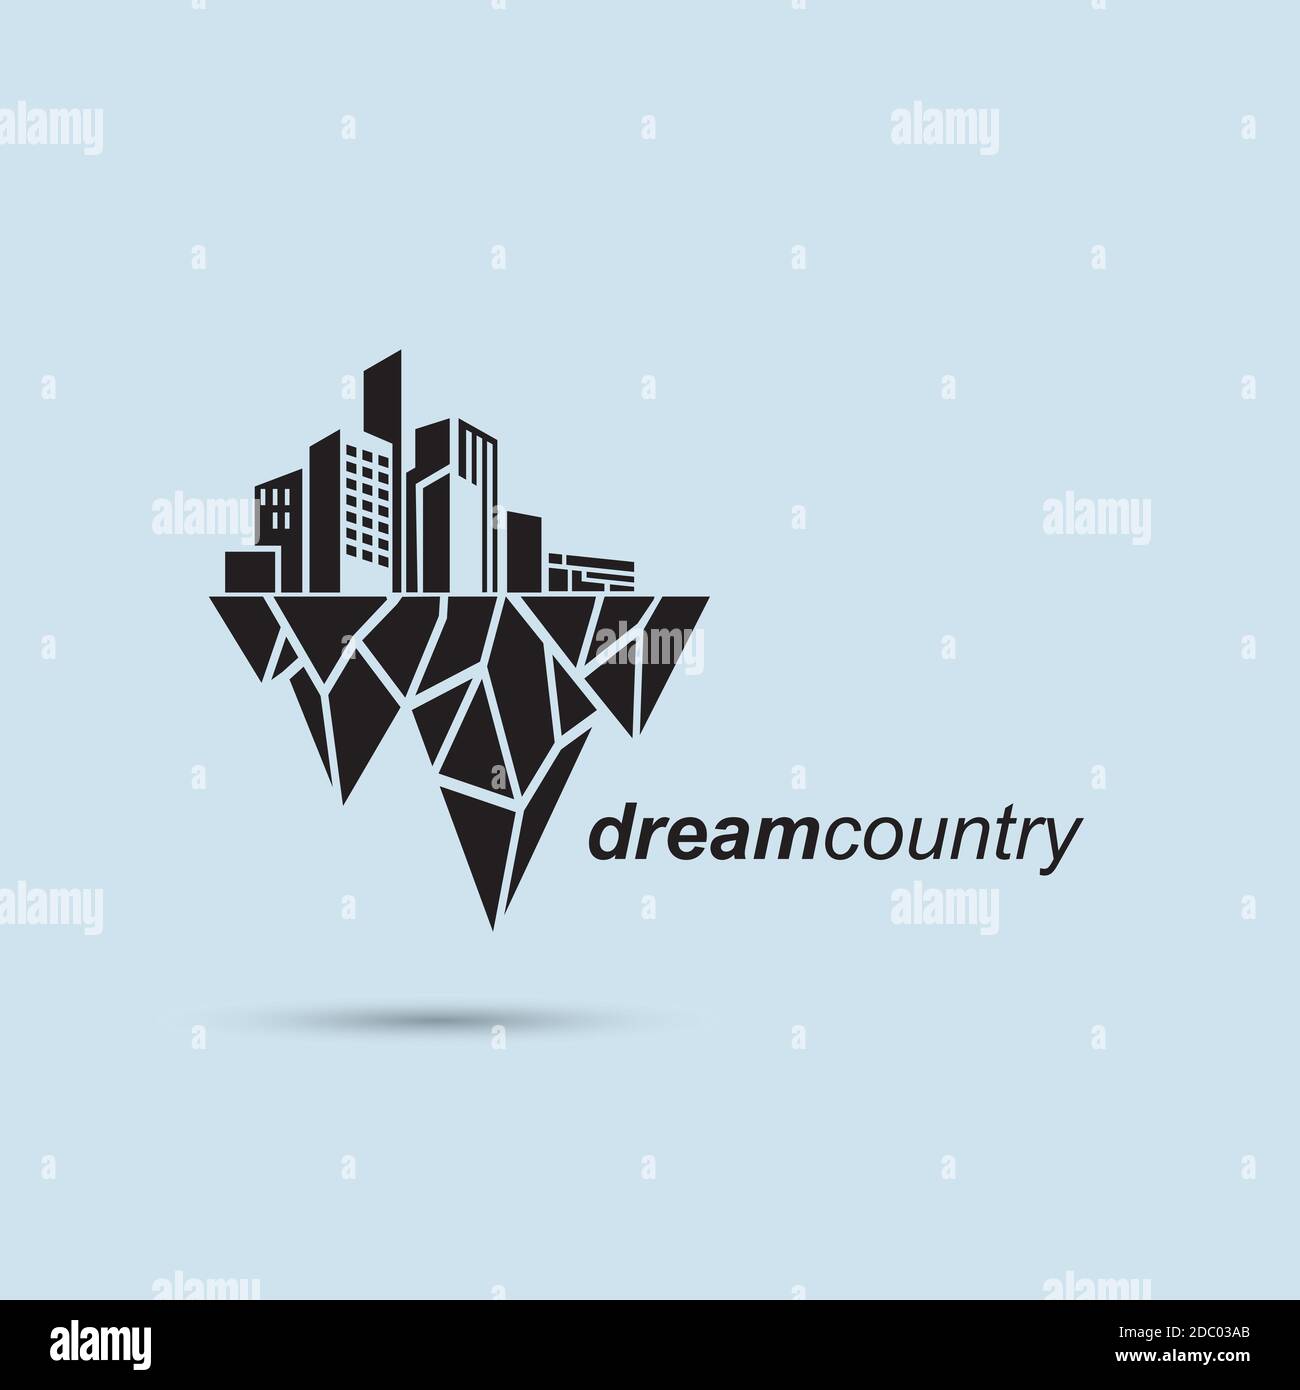 Dream city illustration logo design vector template.Dream land icon Stock Vector